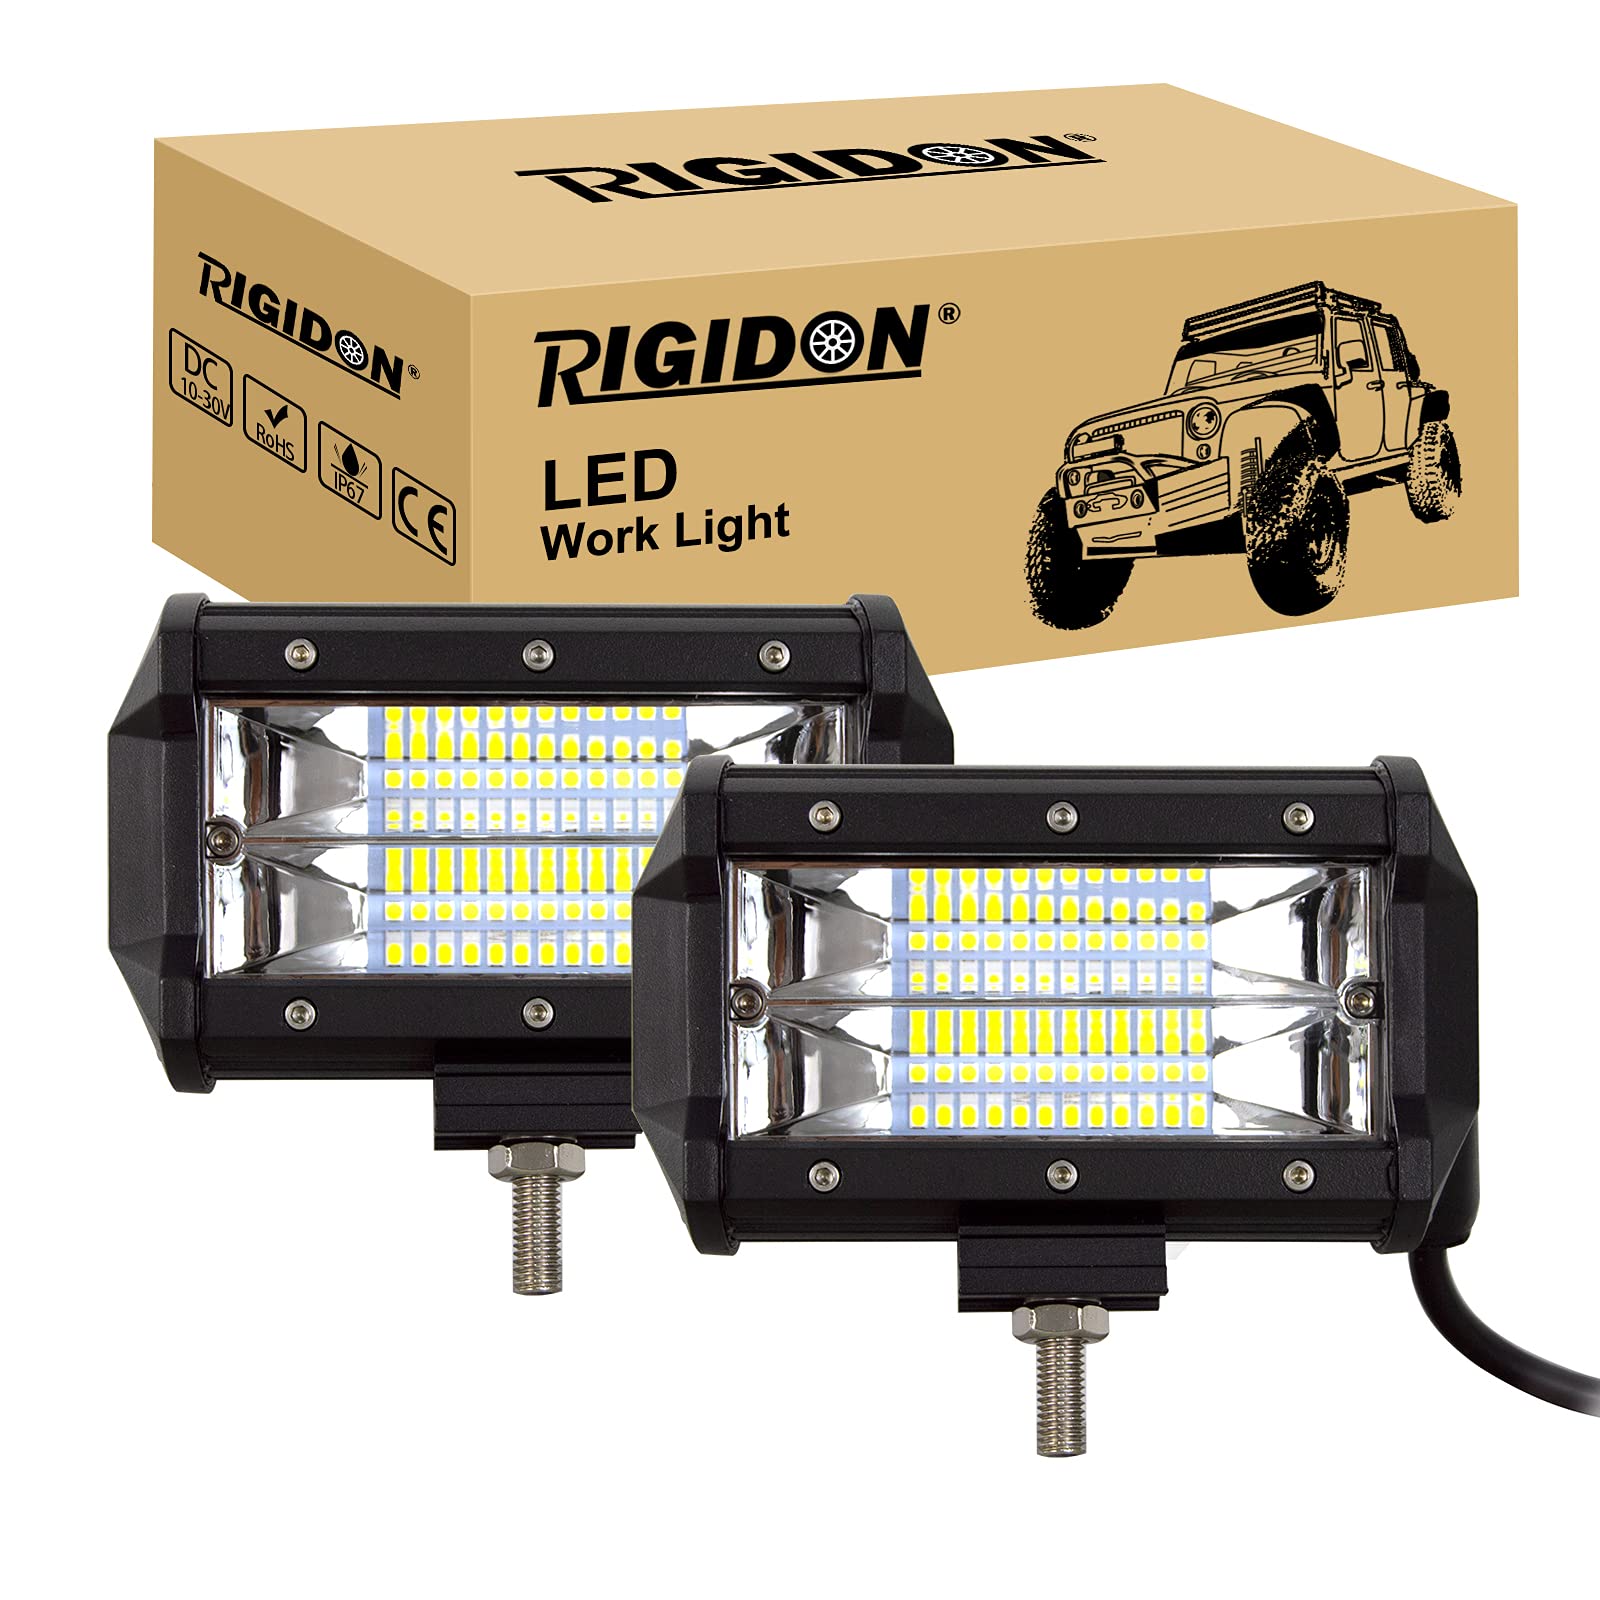 RIGIDON 2 Pcs Led arbeitslicht, 5 Zoll 13cm 72W Spot Strahler offroad beleuchtung für Auto SUV ATV, Traktor, LKW, 4x4, 6000K Weiß led nebelscheinwerfer, led arbeitsscheinwerfer, led scheinwerfer von RIGIDON